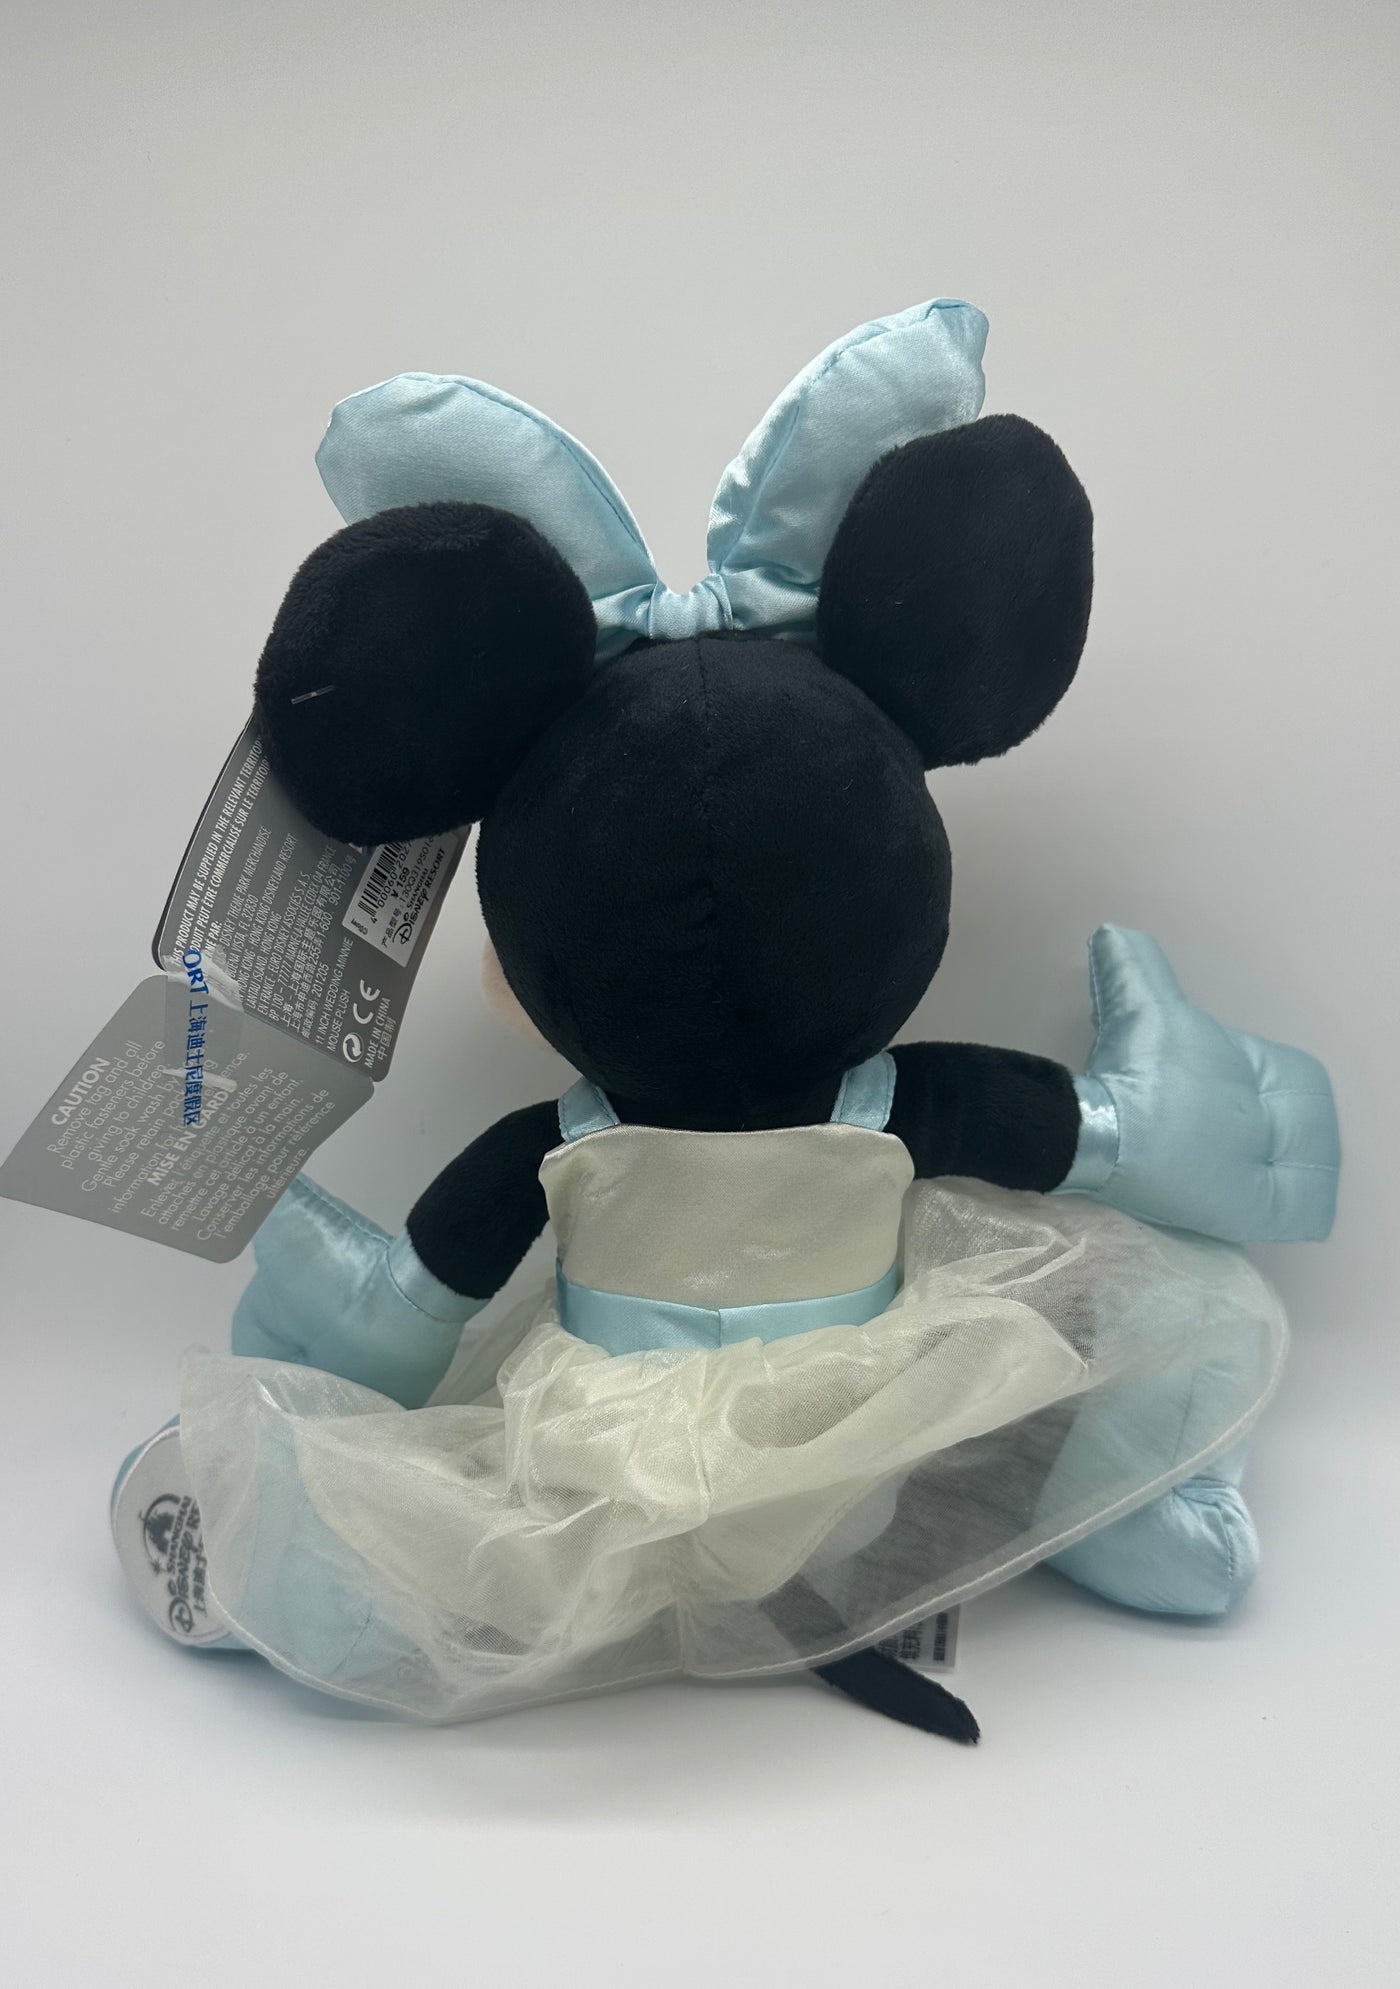 Disney Parks Authentic Shanghai Resort Minnie Wedding Plush New with Tag